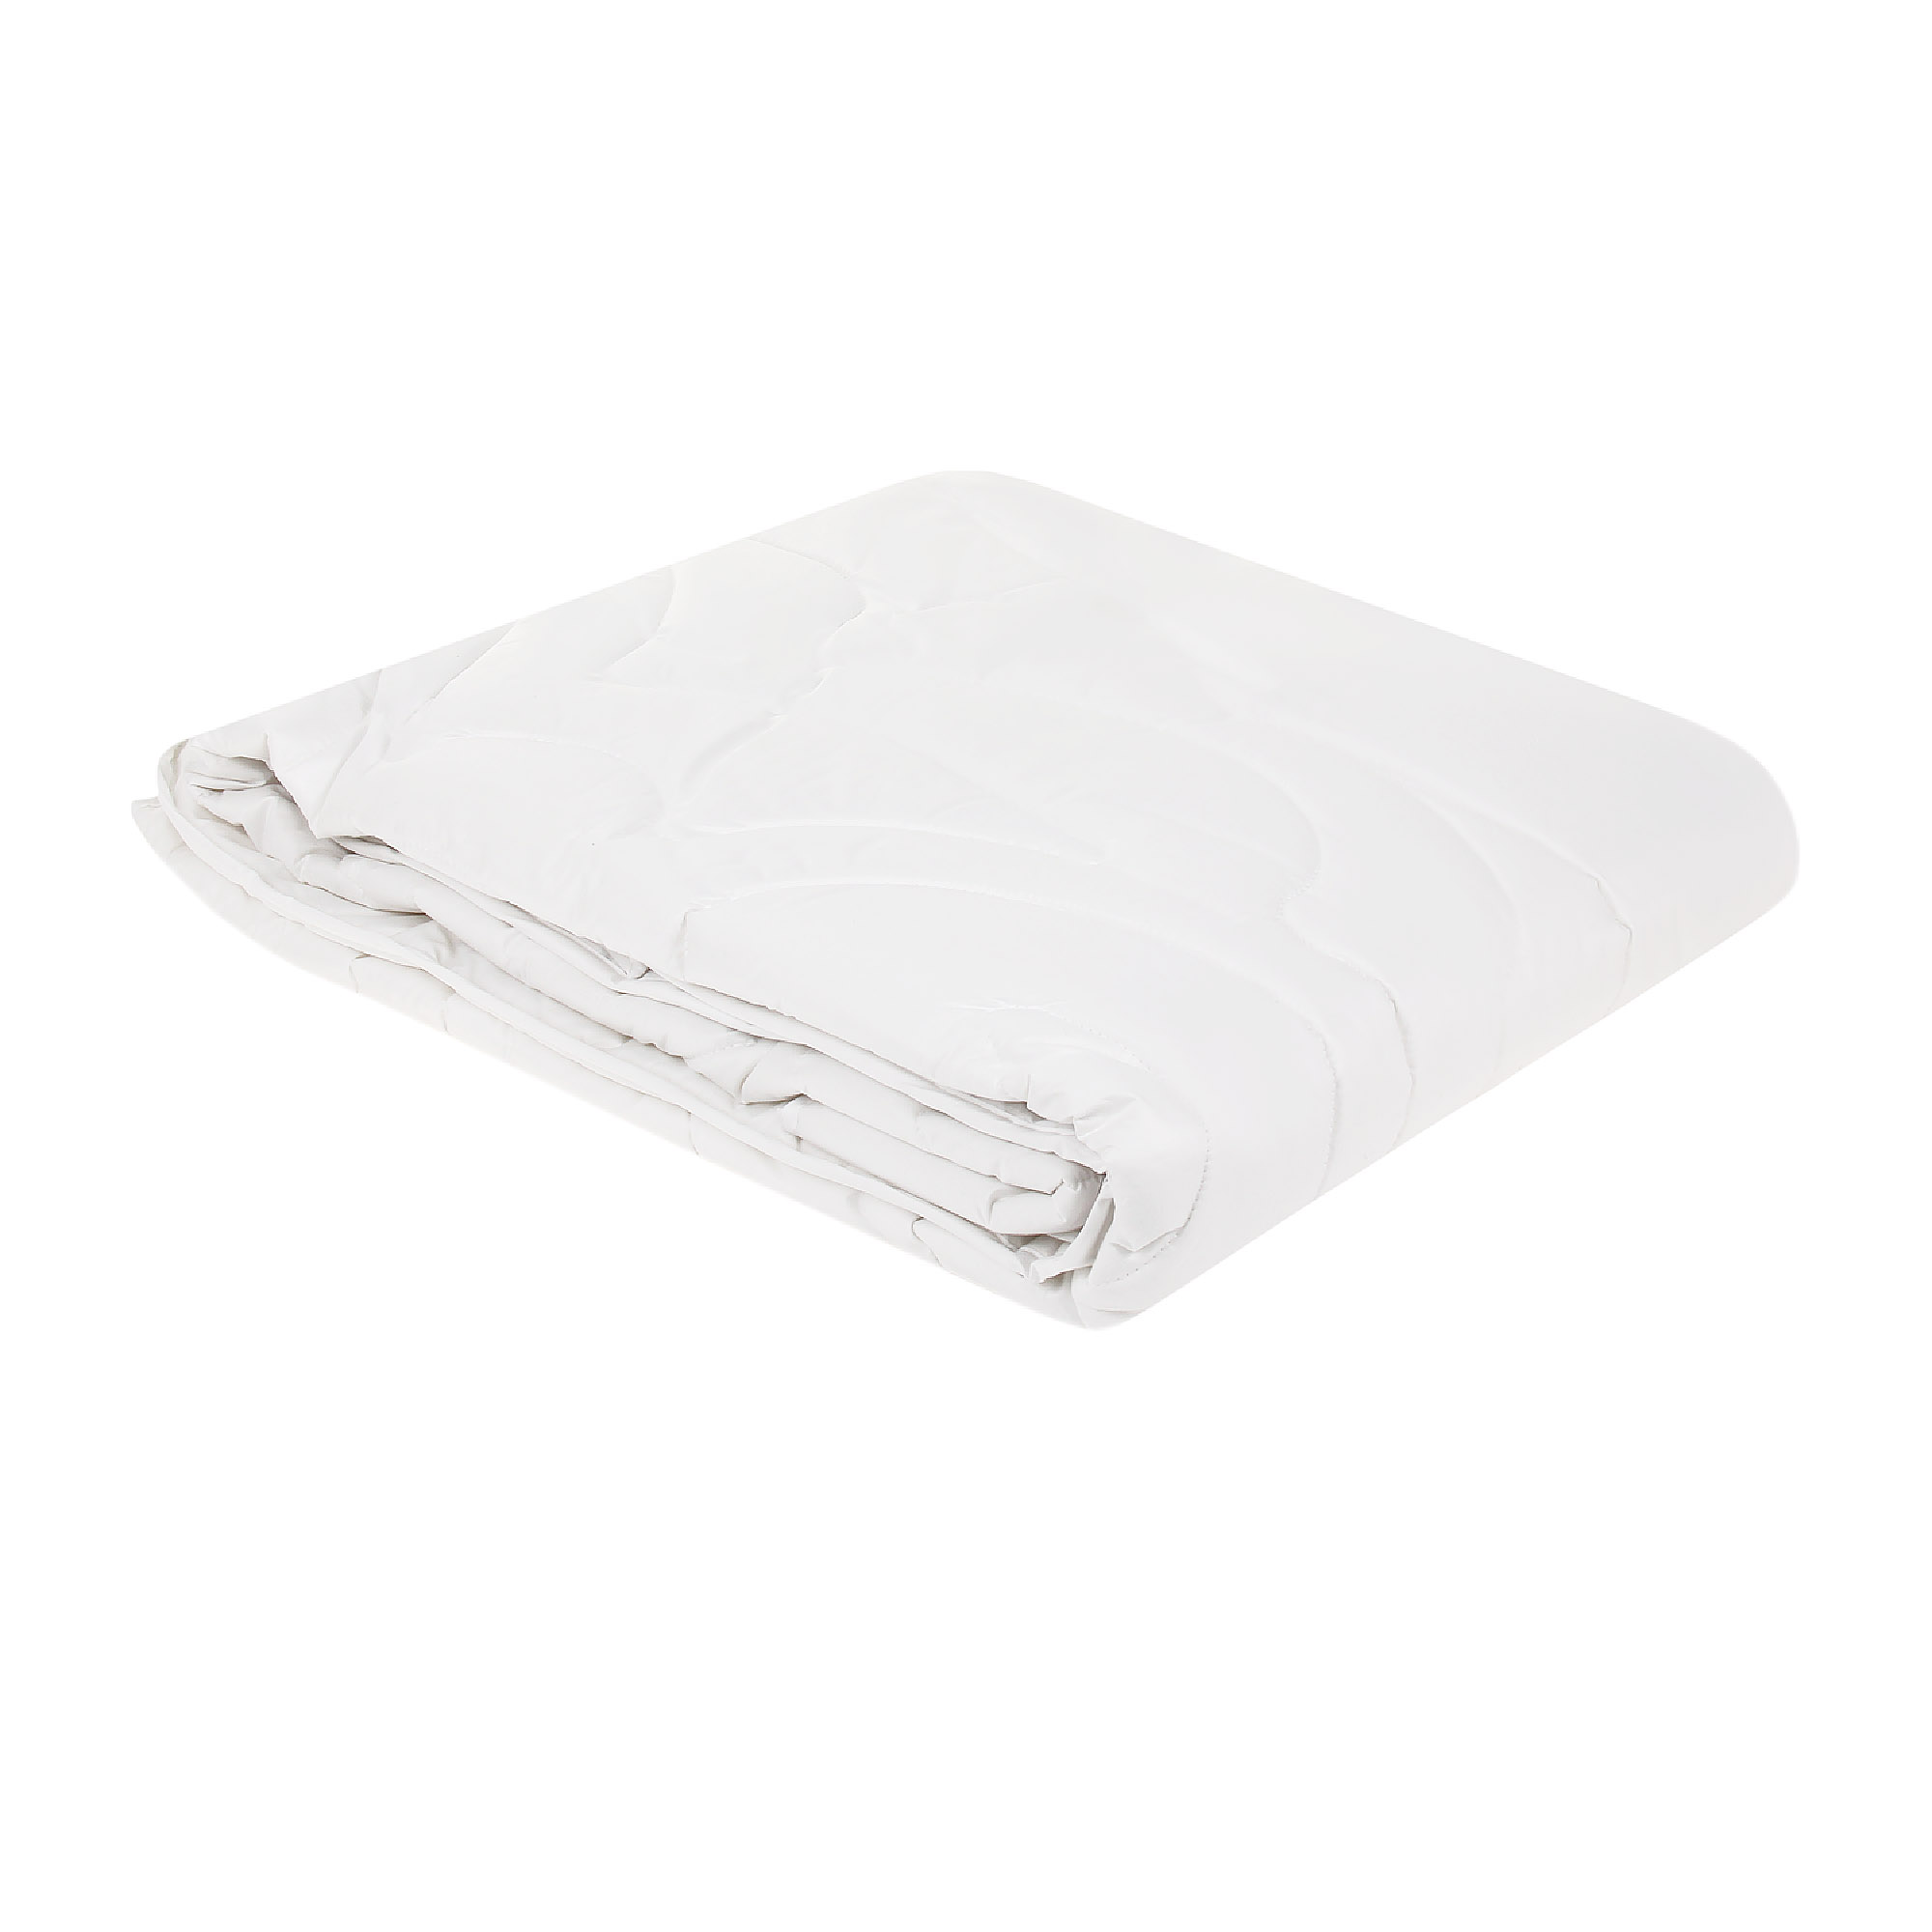 Одеяло легкое Estia Фальтерона 140х200, размер 140х200 см - фото 5